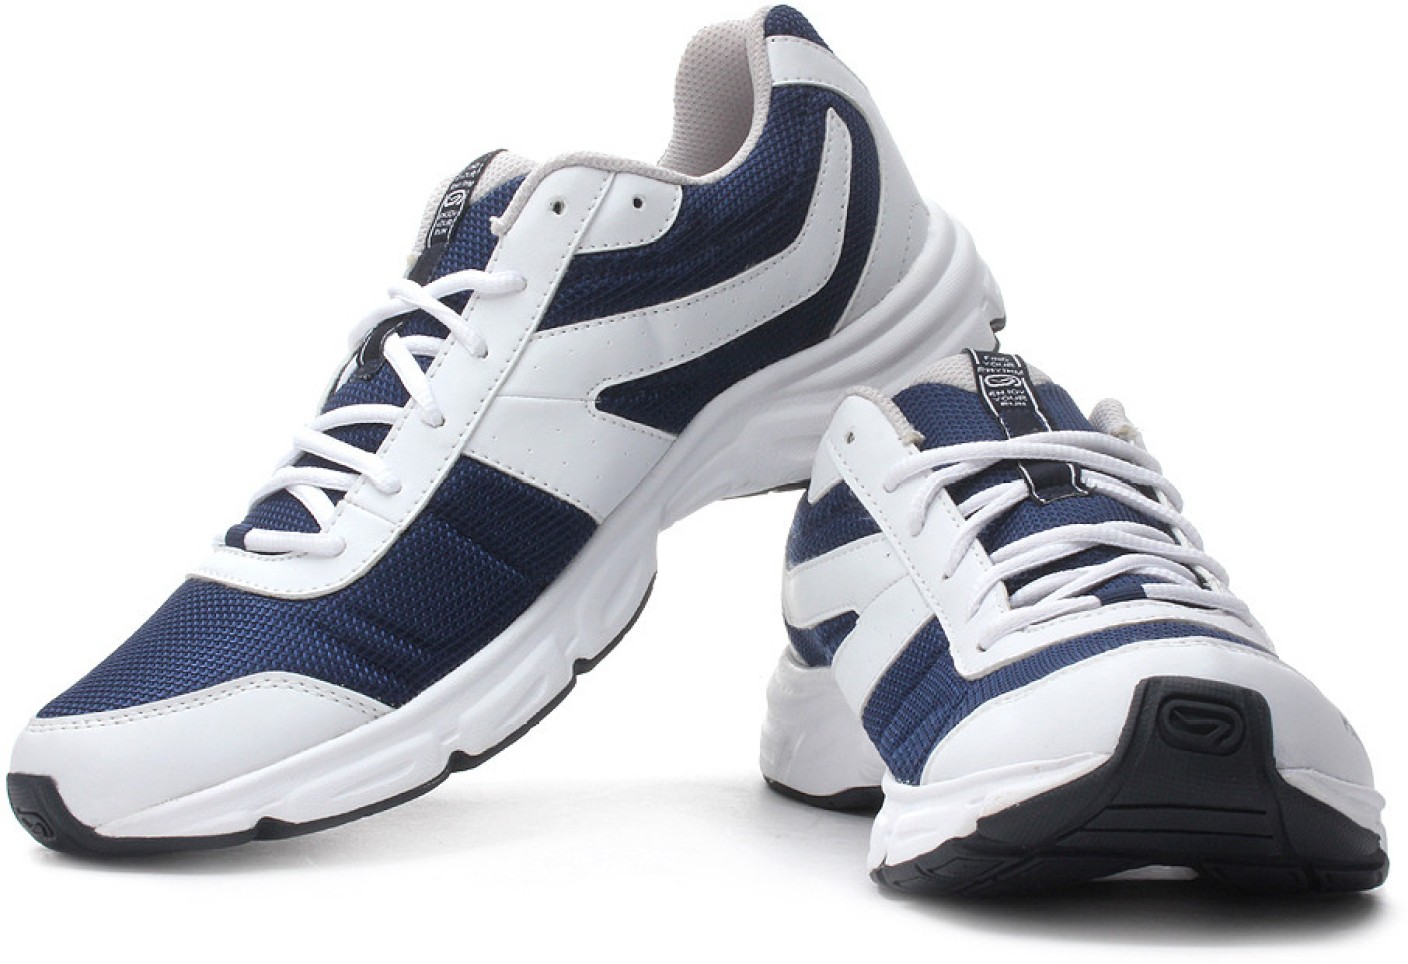 Kalenji by Decathlon Ekiden 50 Running Shoes For Men - Buy Blue Color ...